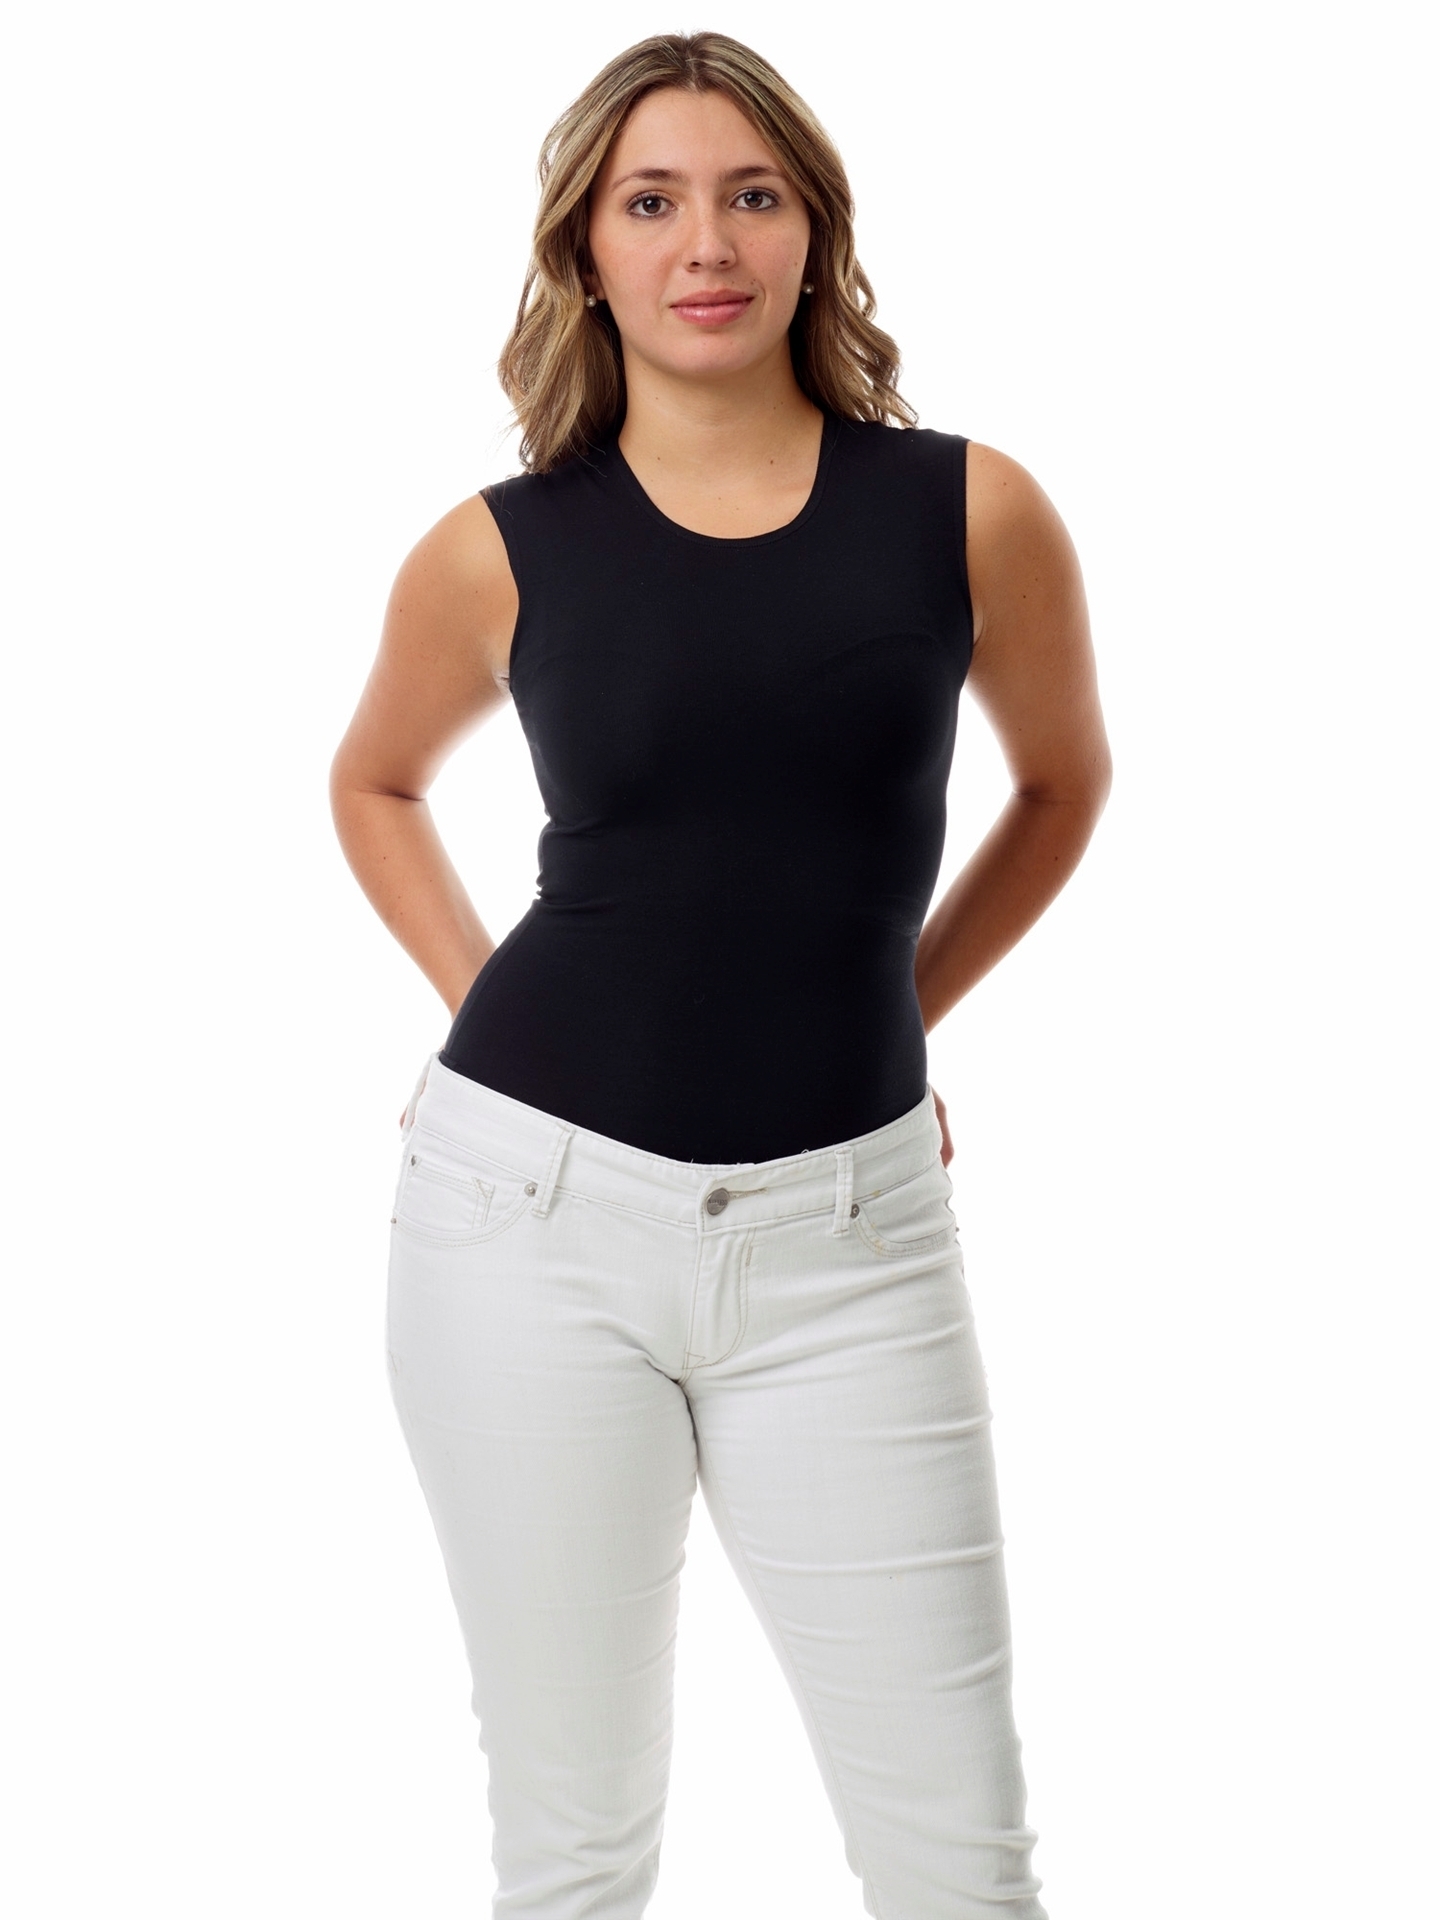 Underworks Womens Ultra Light Cotton Spandex Sleeveless Compression Top -  Black - S